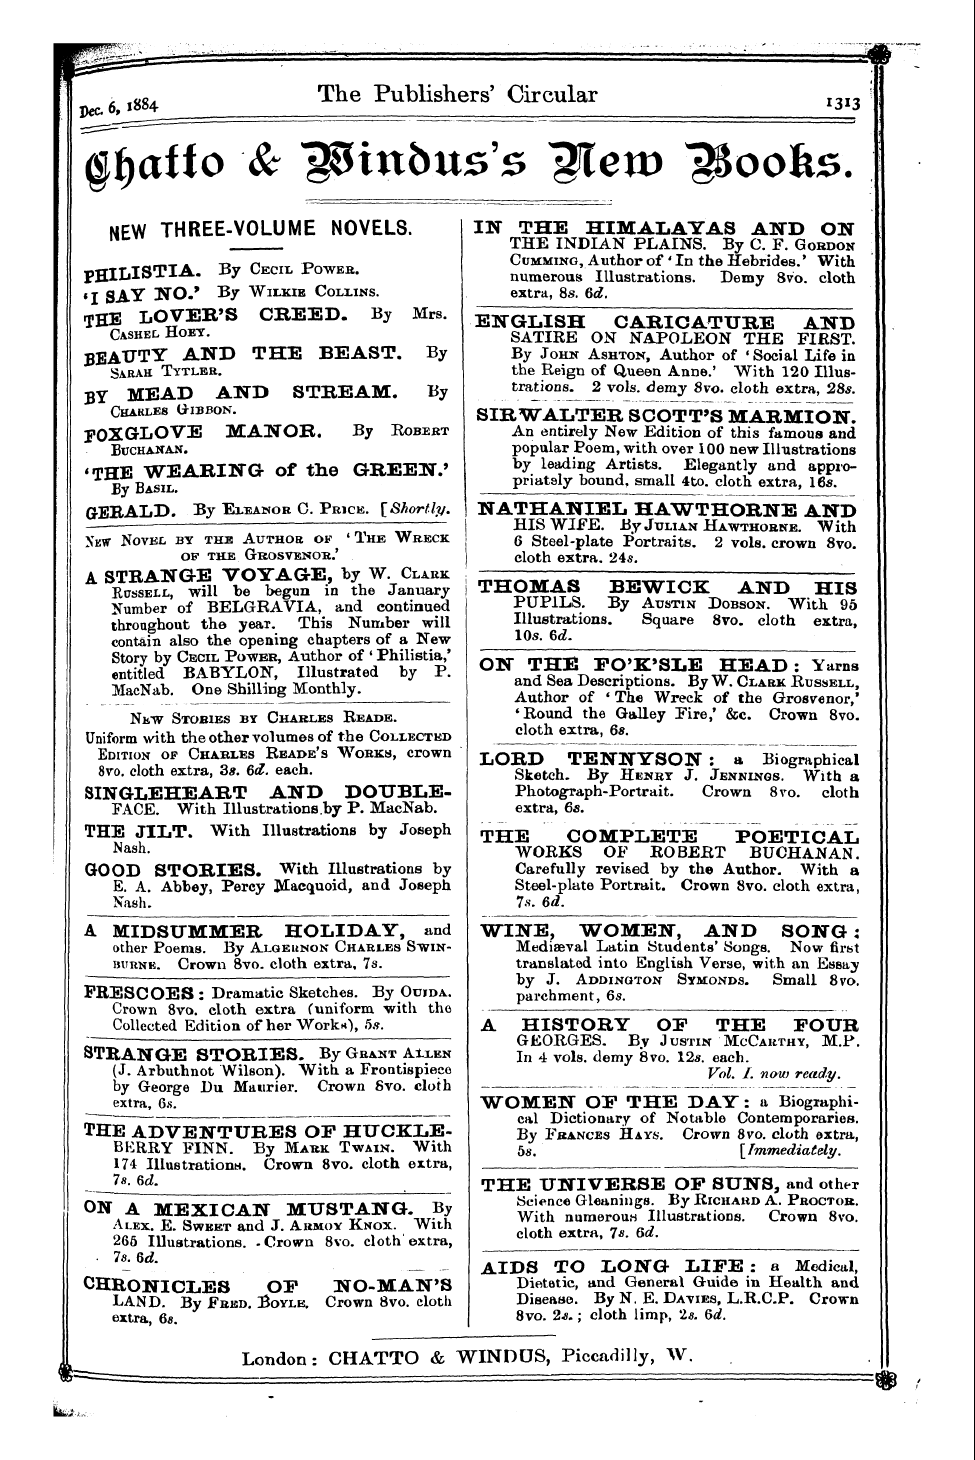 Publishers’ Circular (1880-1890): jS F Y, 1st edition: 81